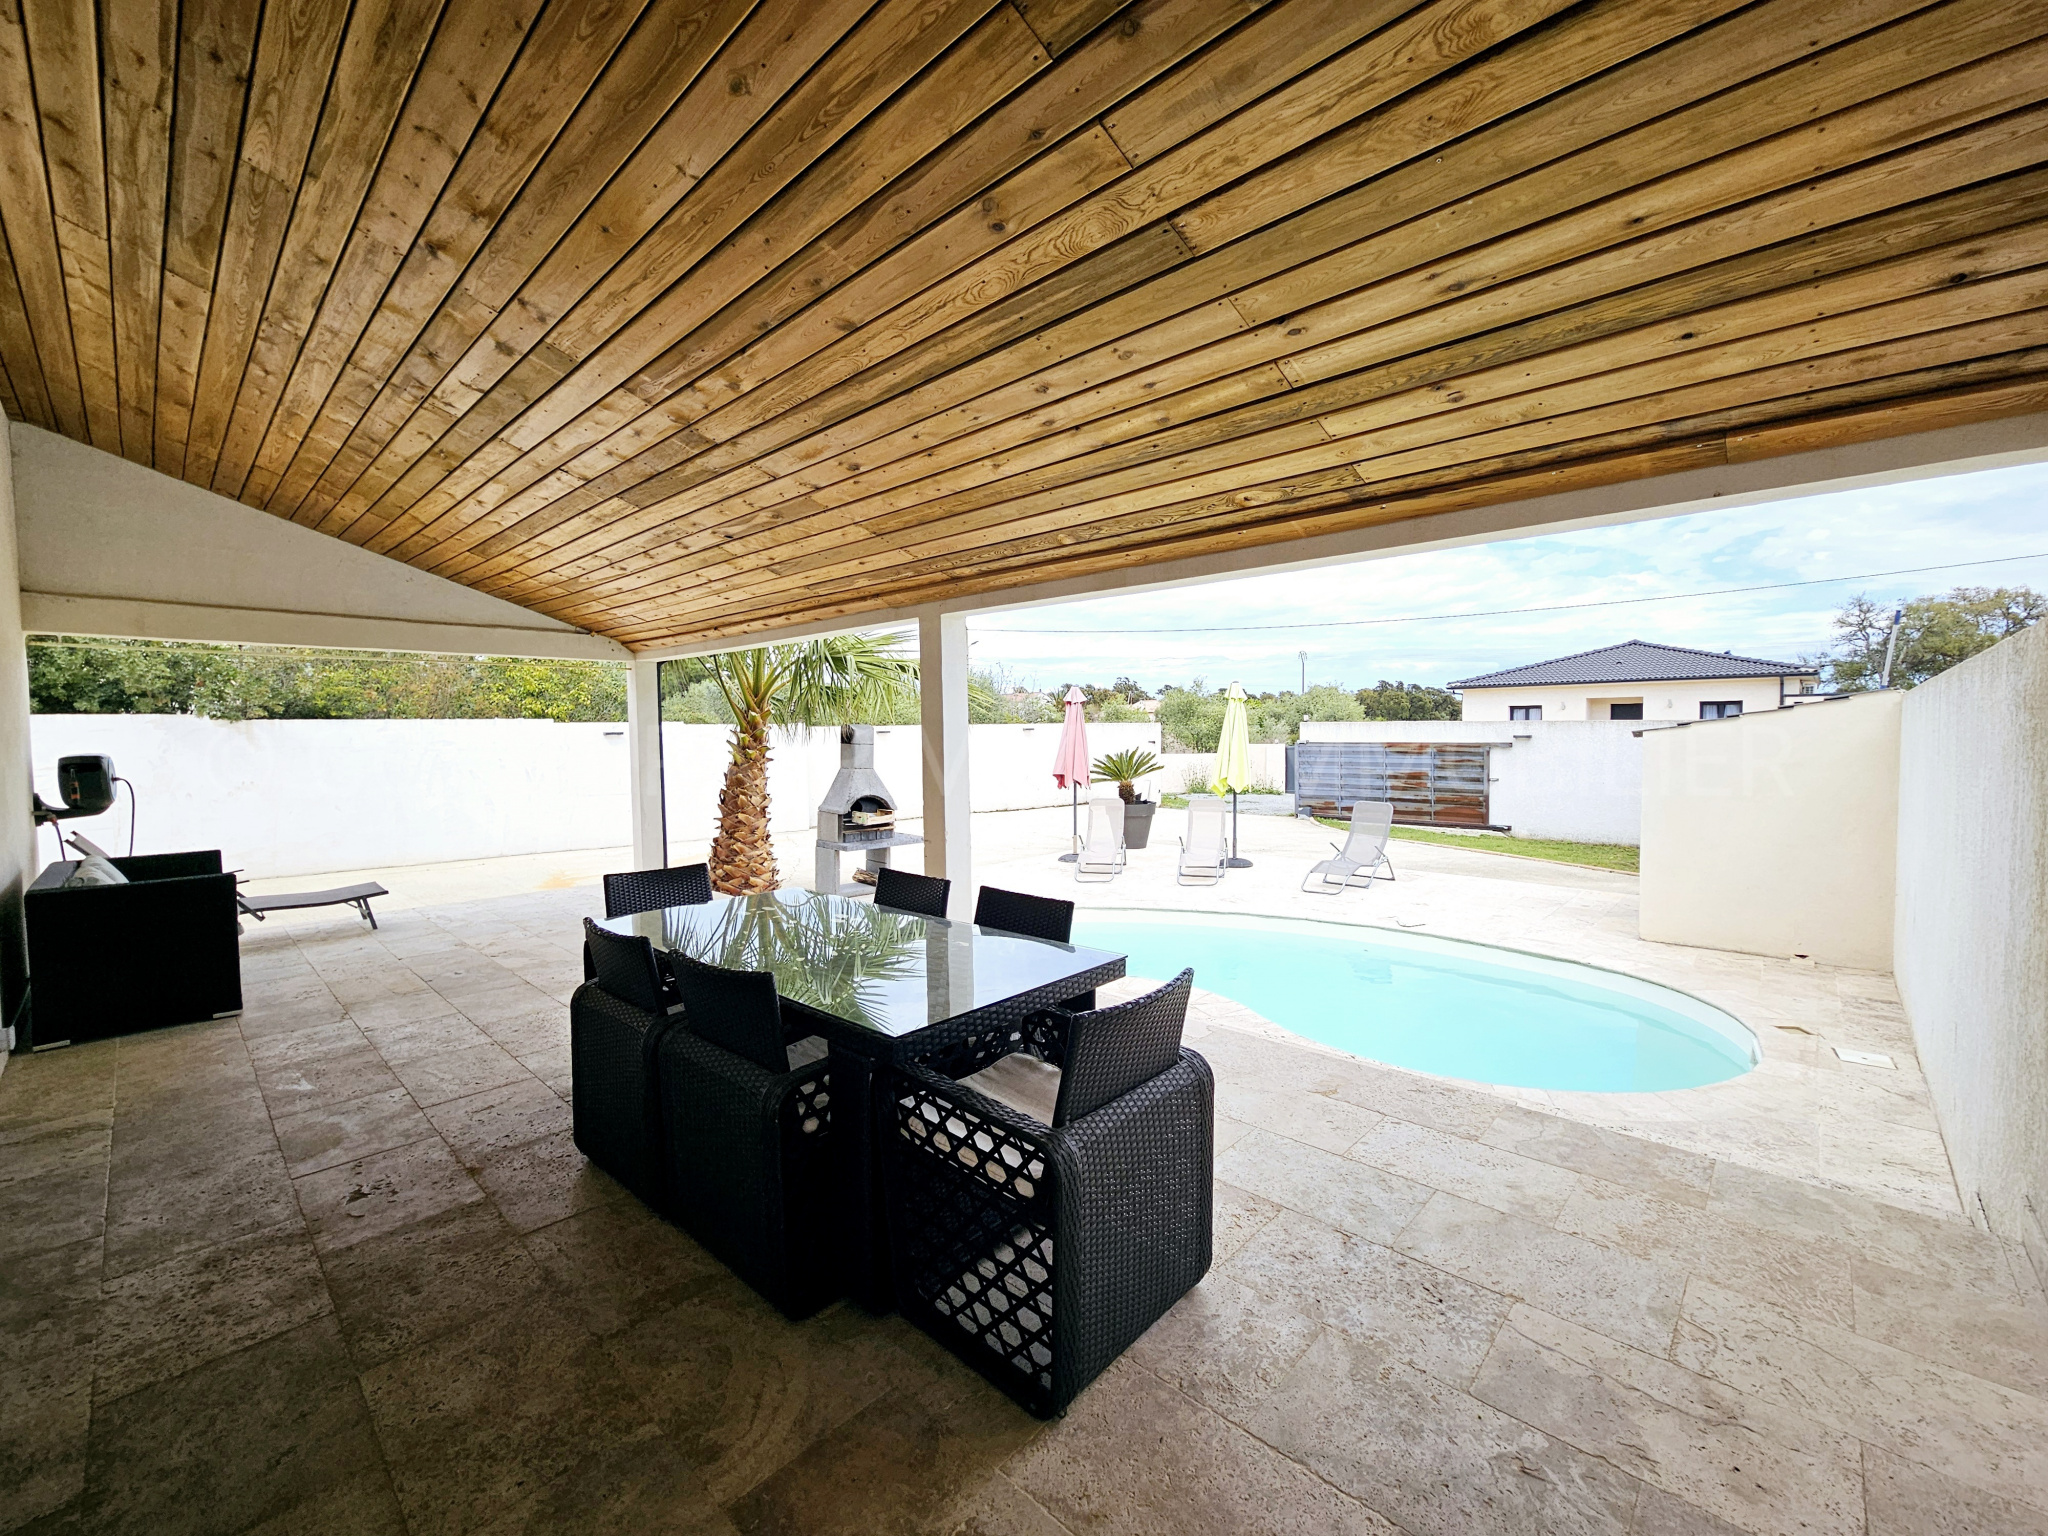 Villa T5 200 m2 avec piscine  